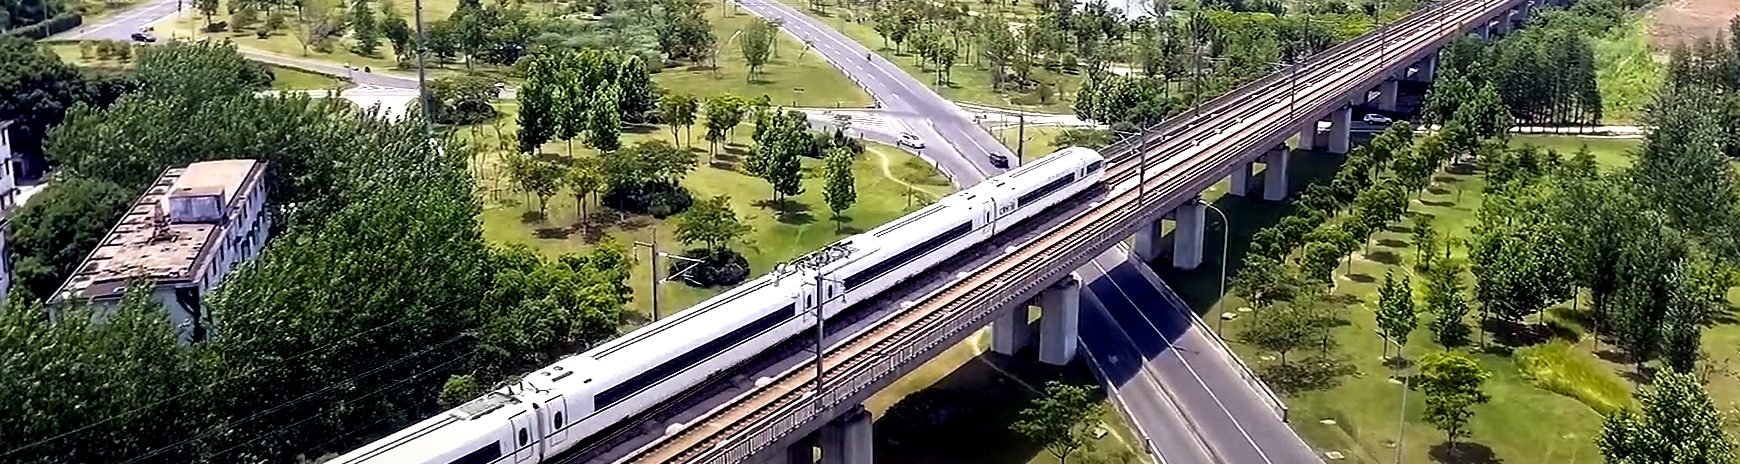 Image of a train, rail track and bridge